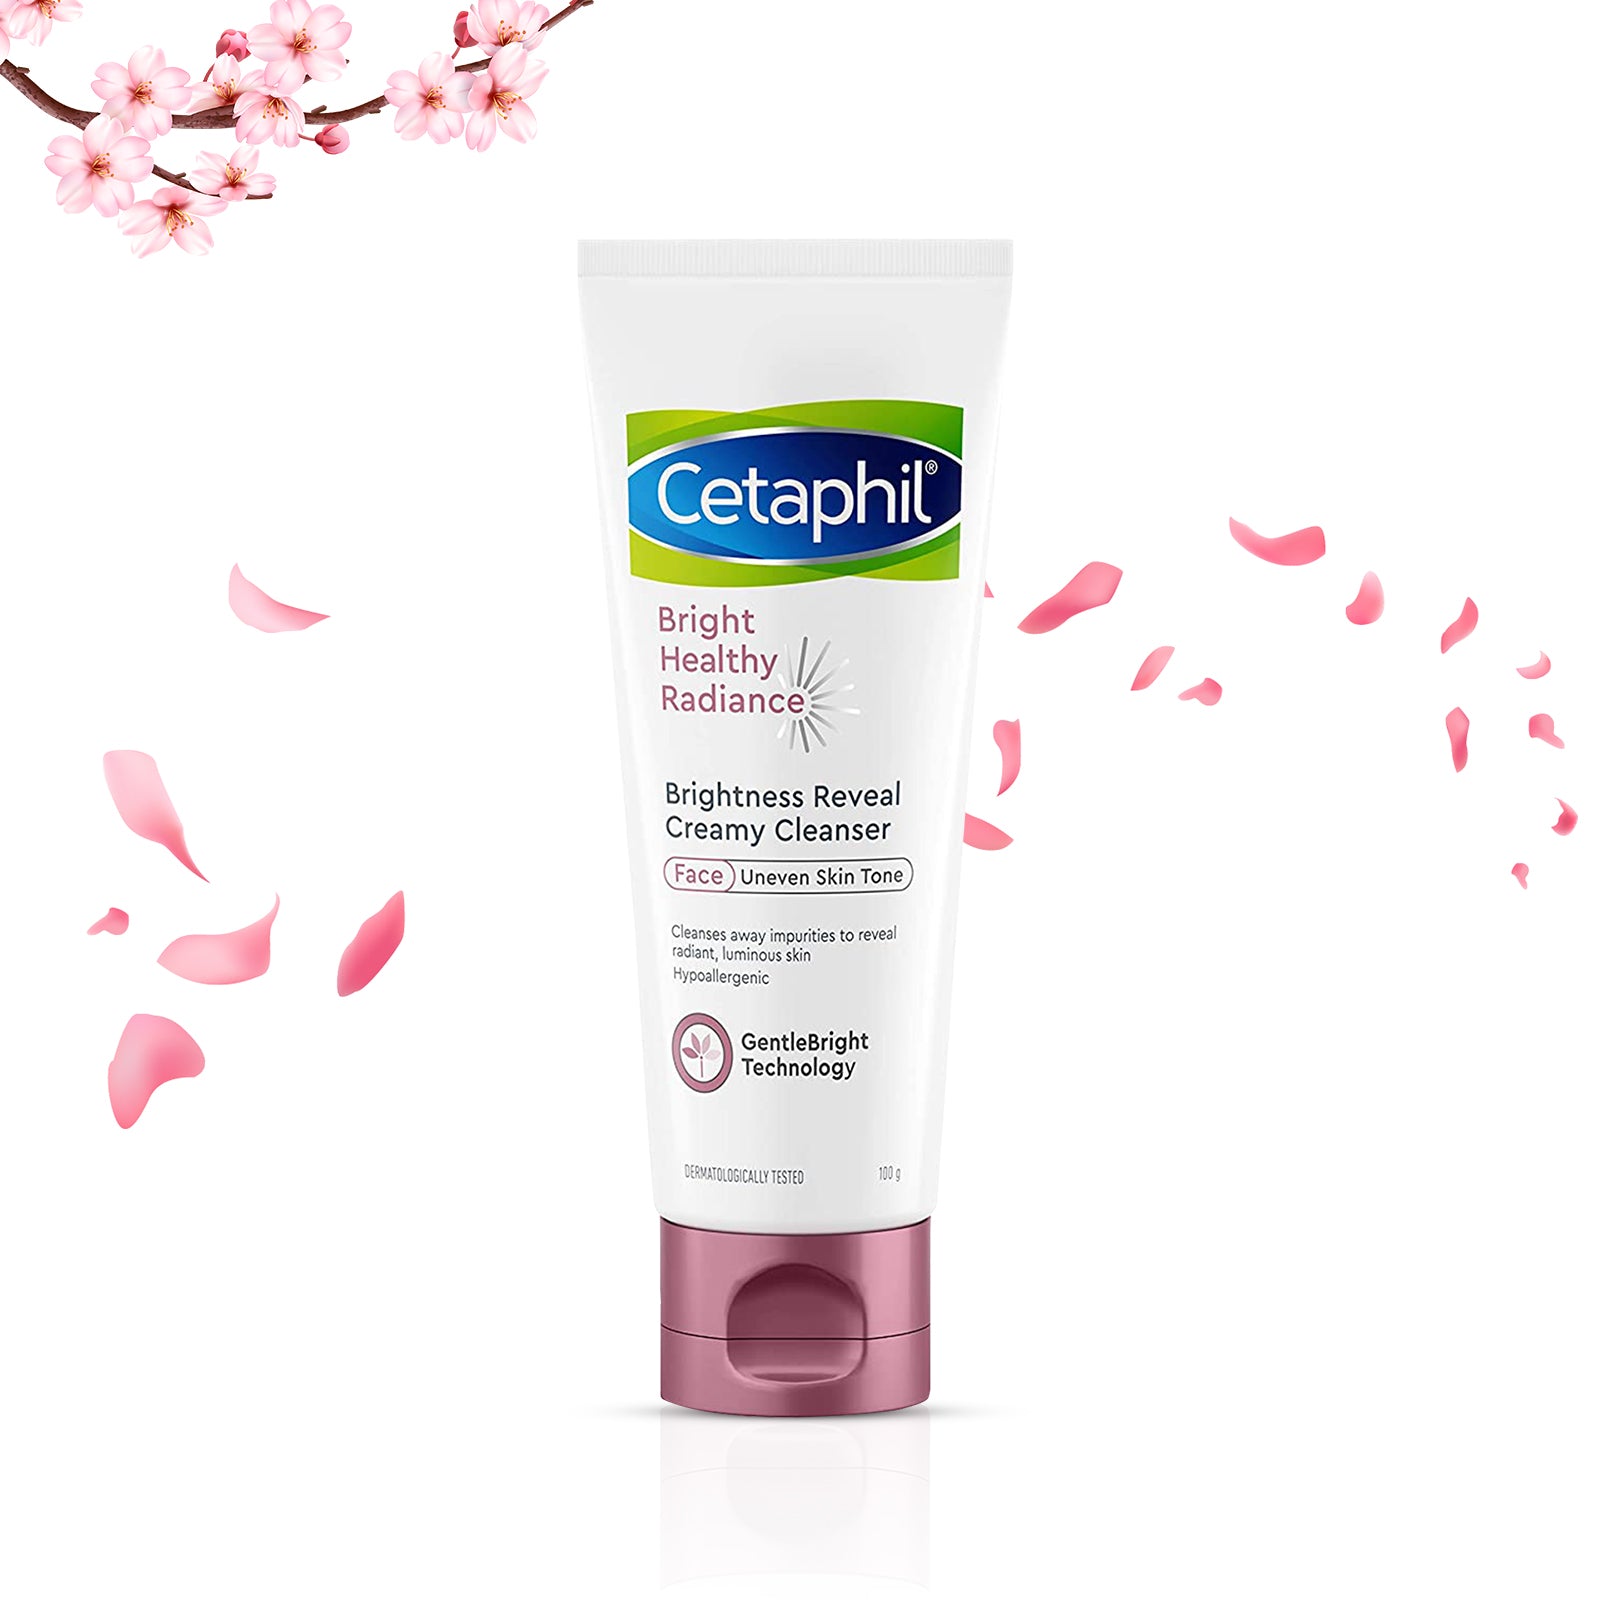 Cetaphil Brightness Reveal Creamy Cleanser 100 gm